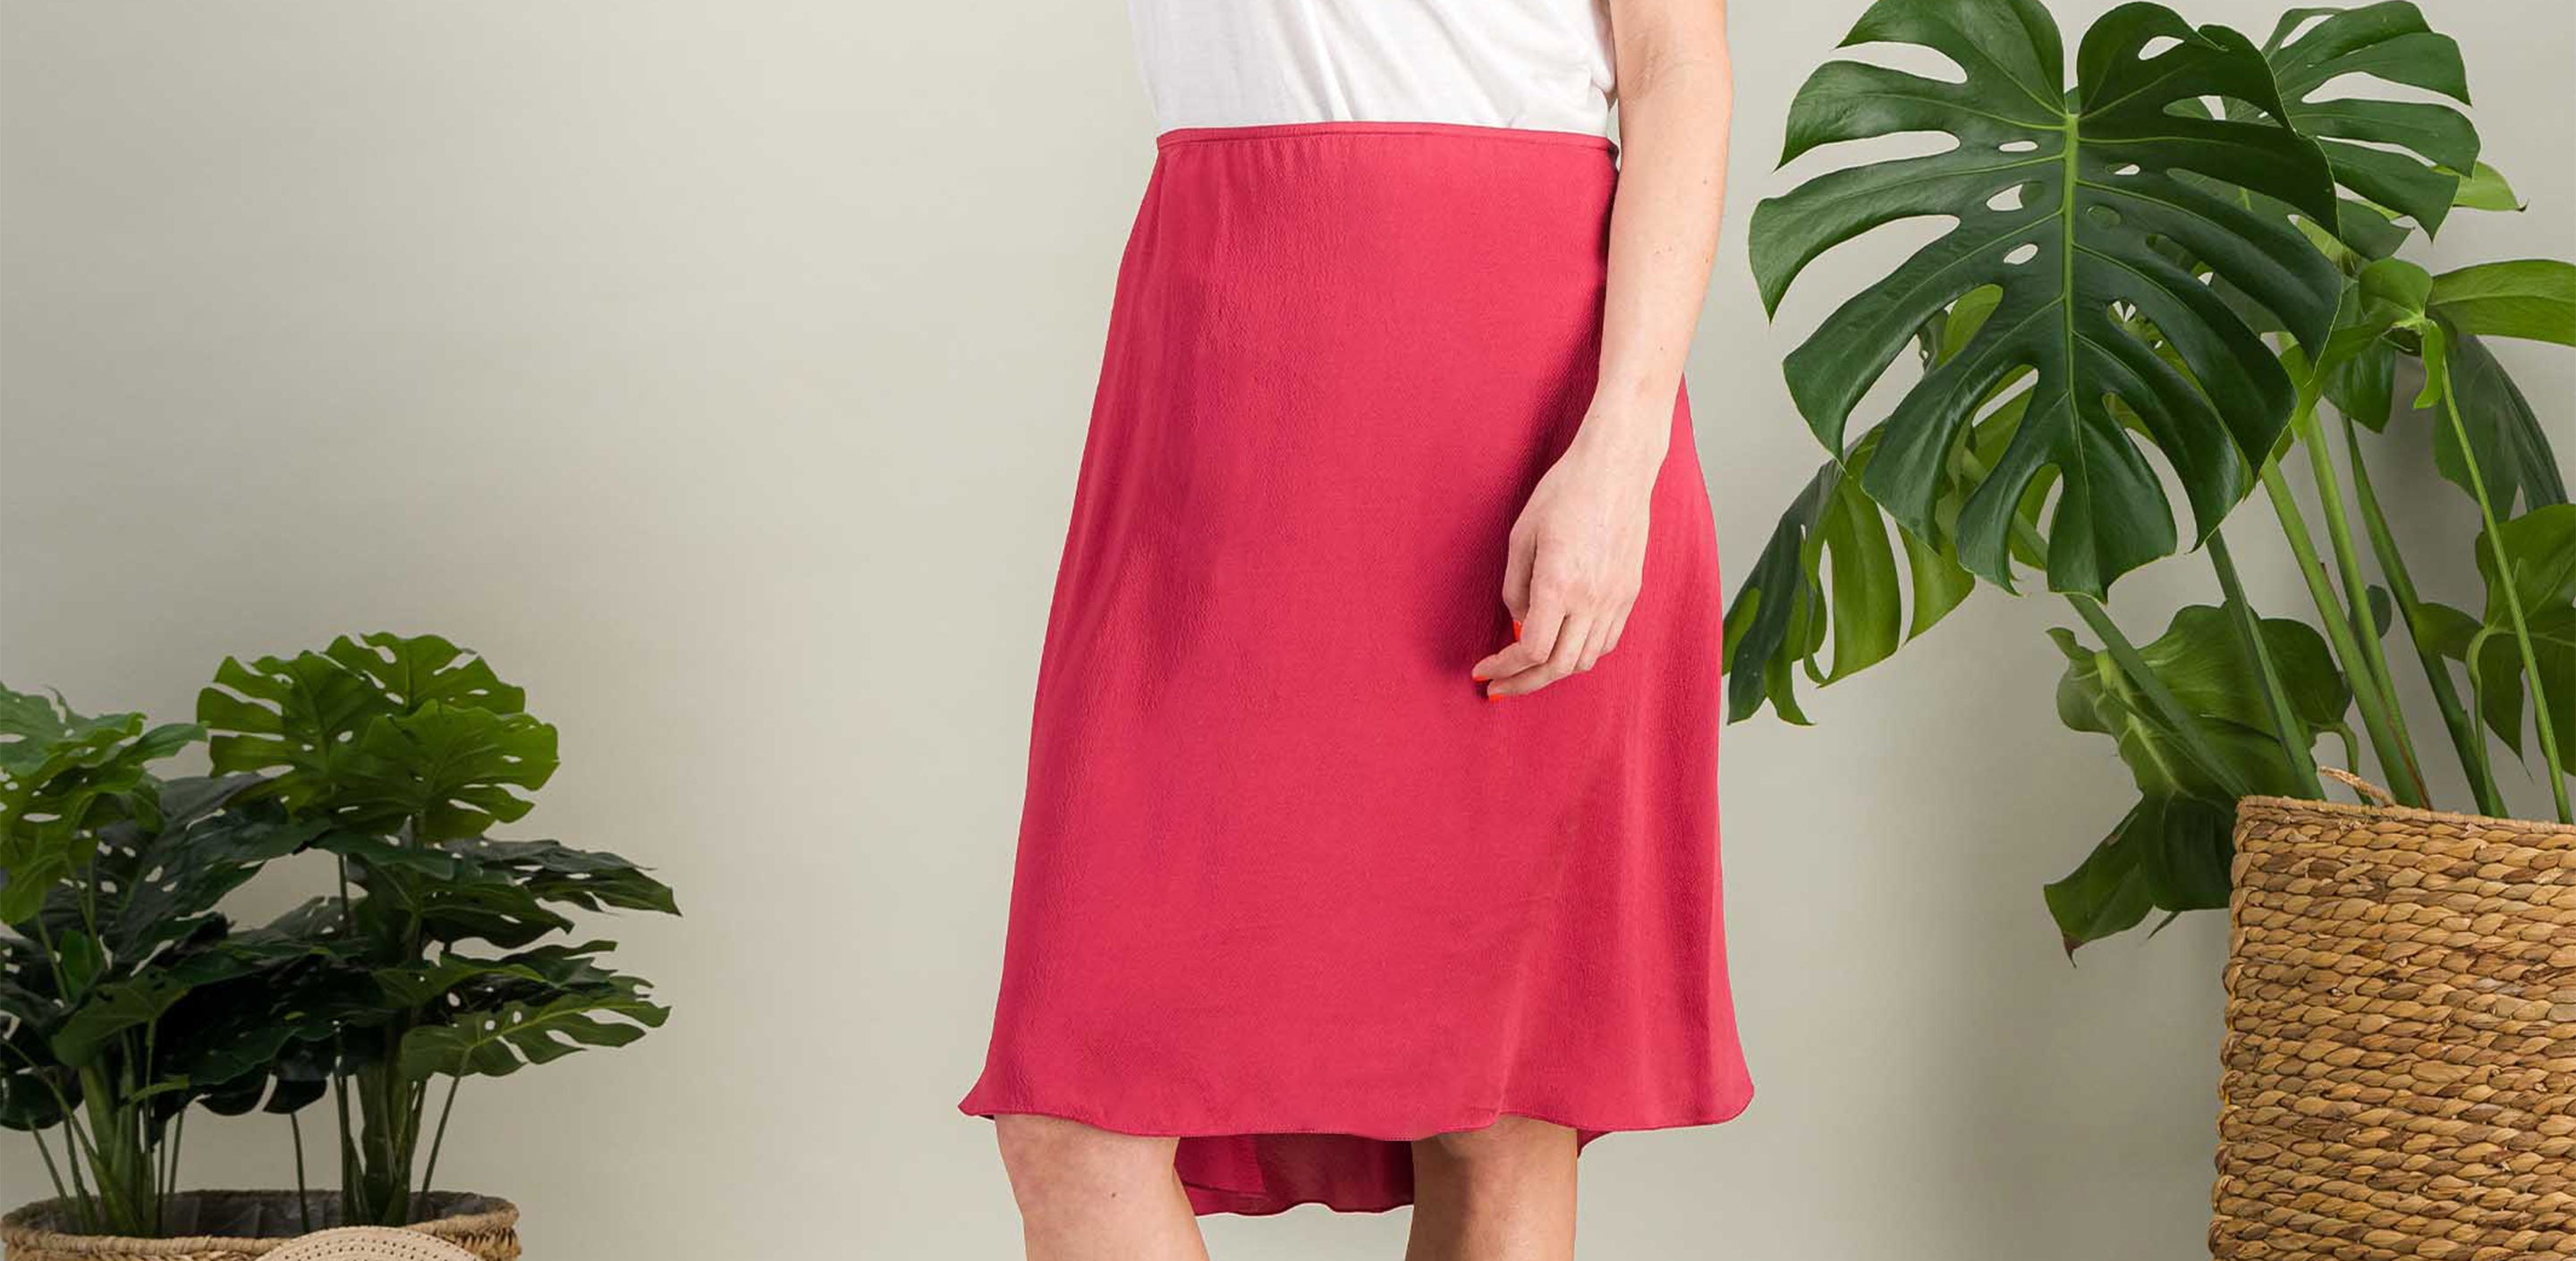 jupe en soie gaufrée rose longueur genoux look casual chic